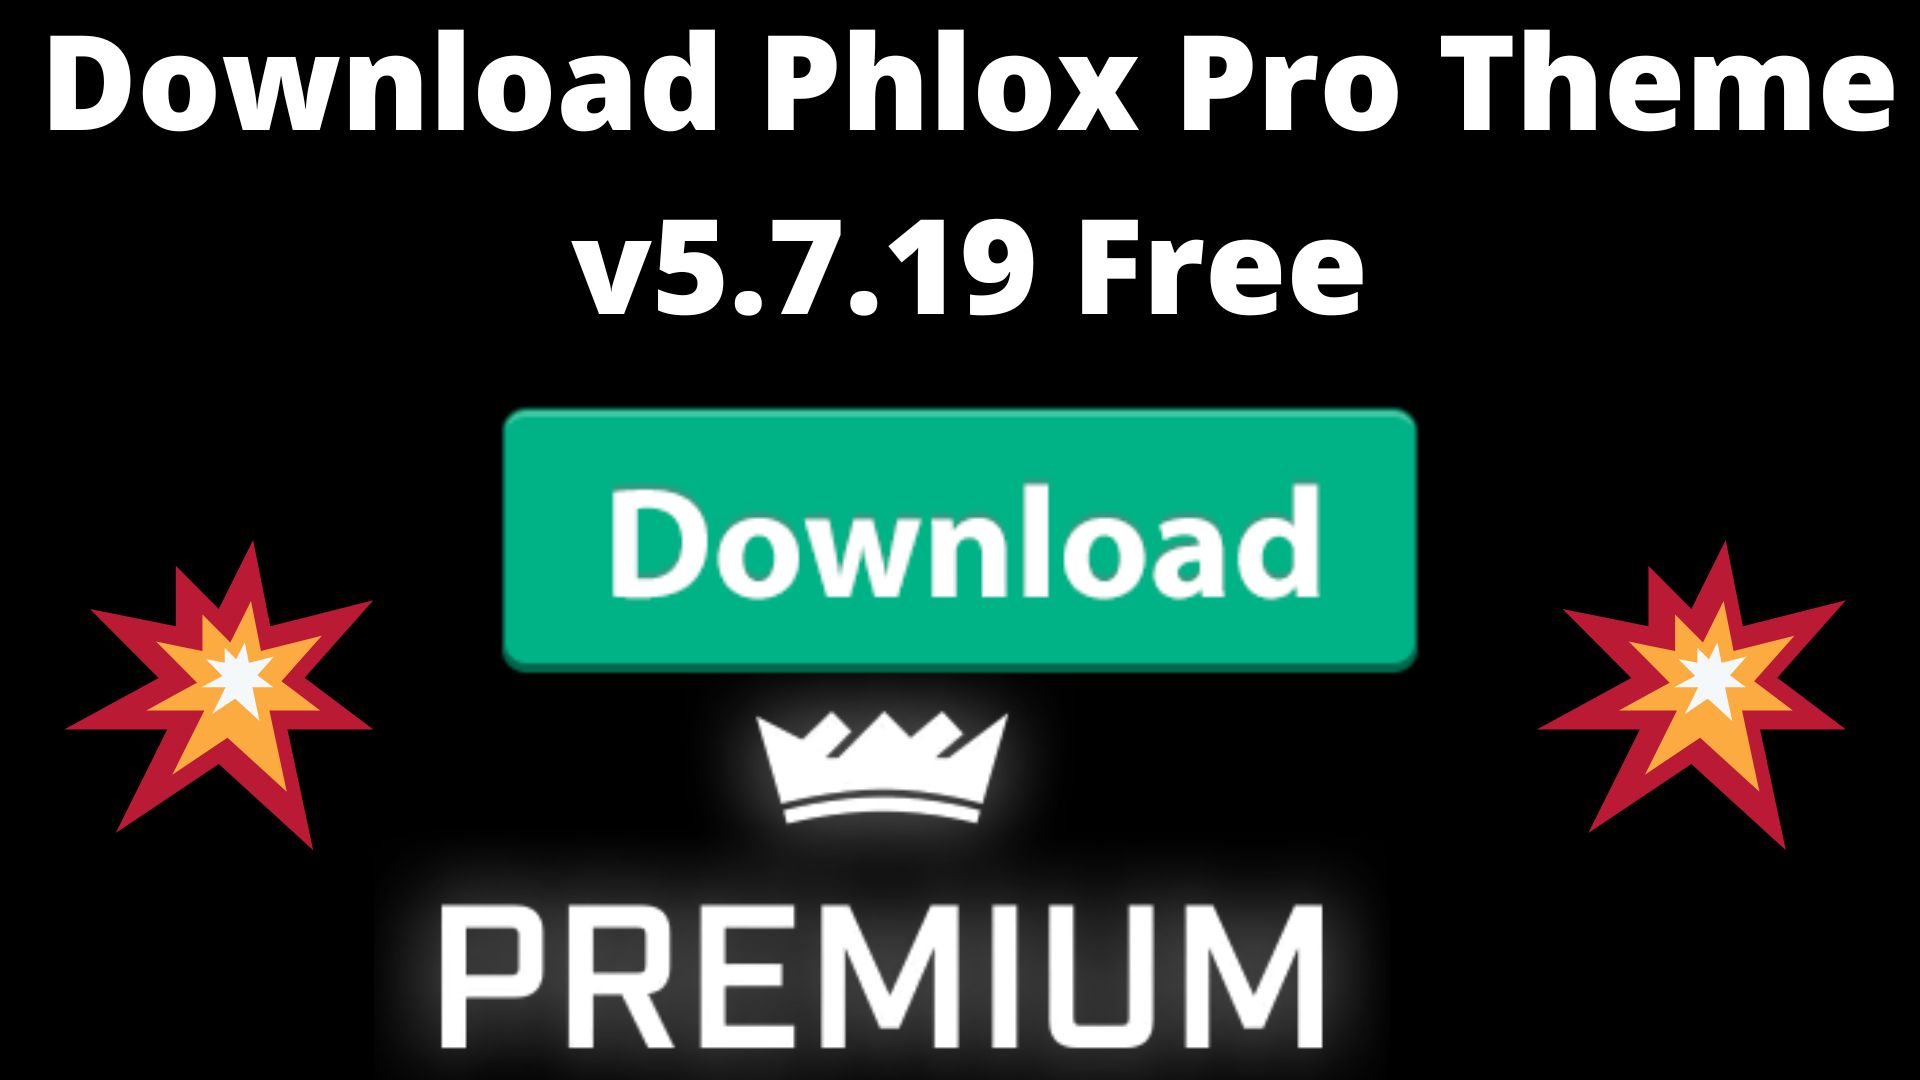 Download Phlox Pro Theme V5.7.19 Free